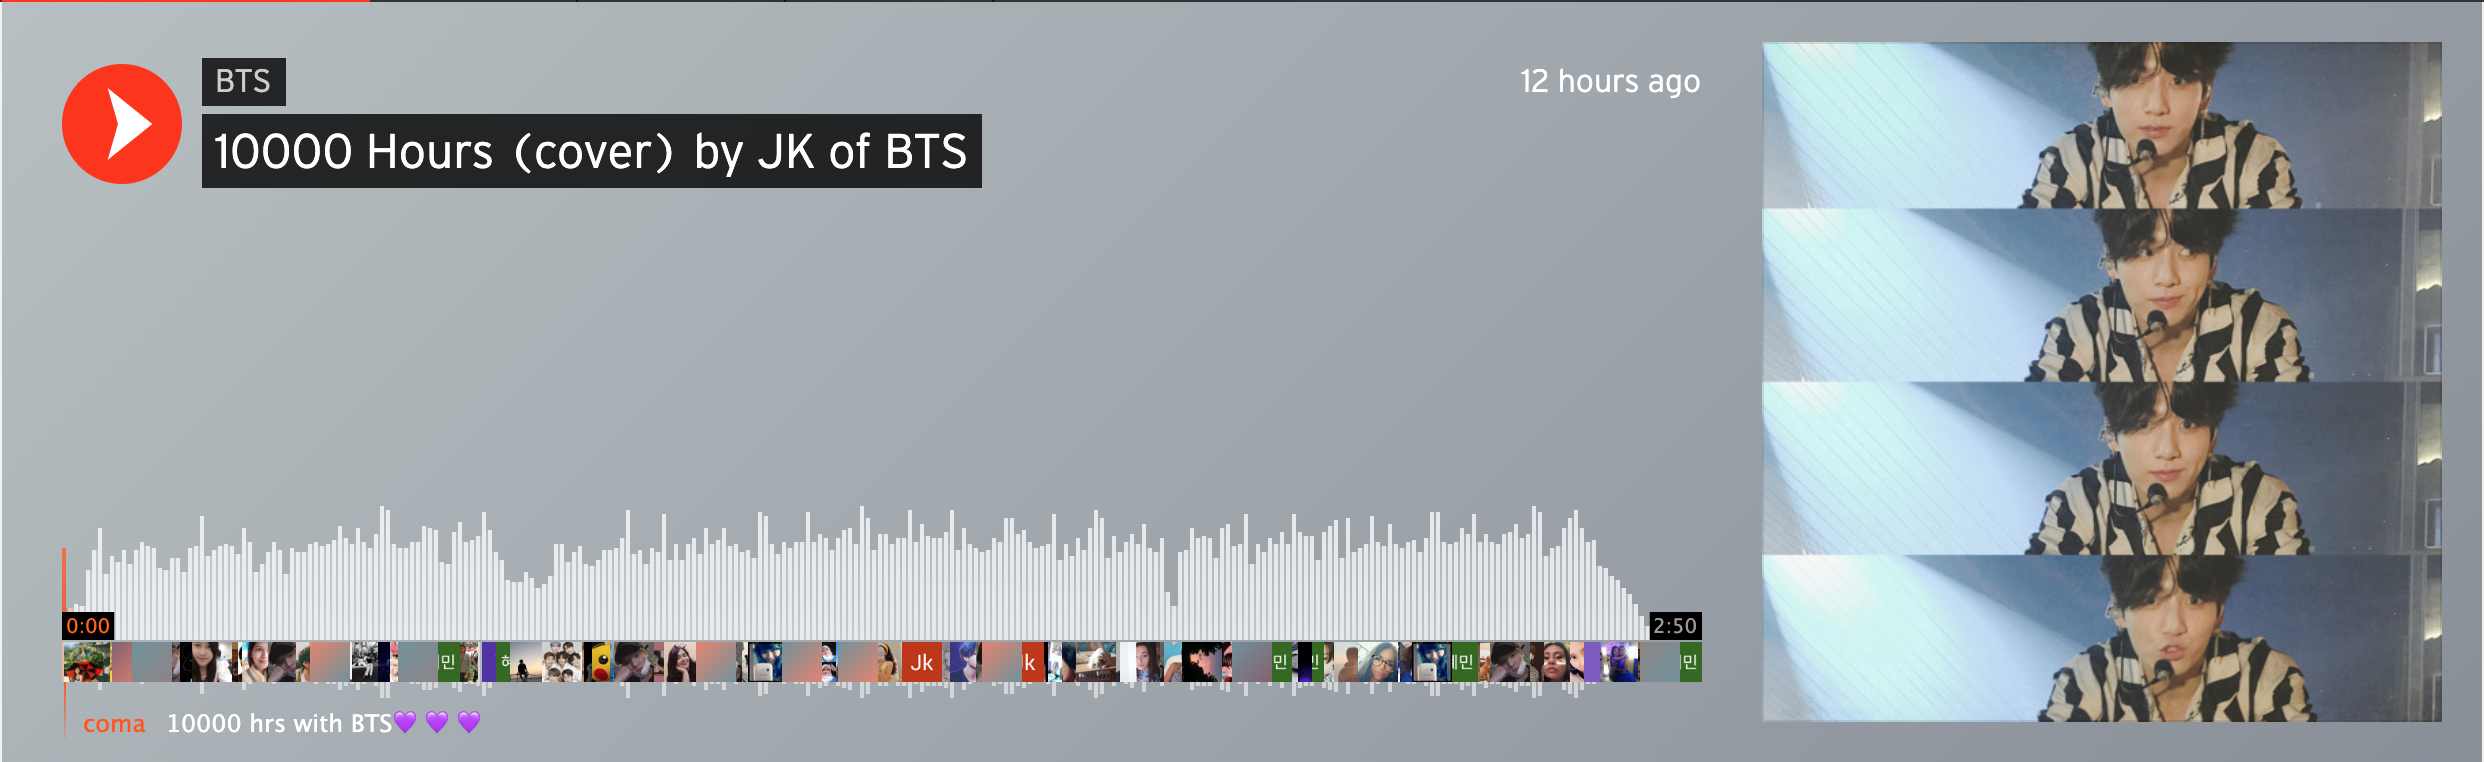 BTS Jungkook 10000 Hours Cover - soundcloud screencap